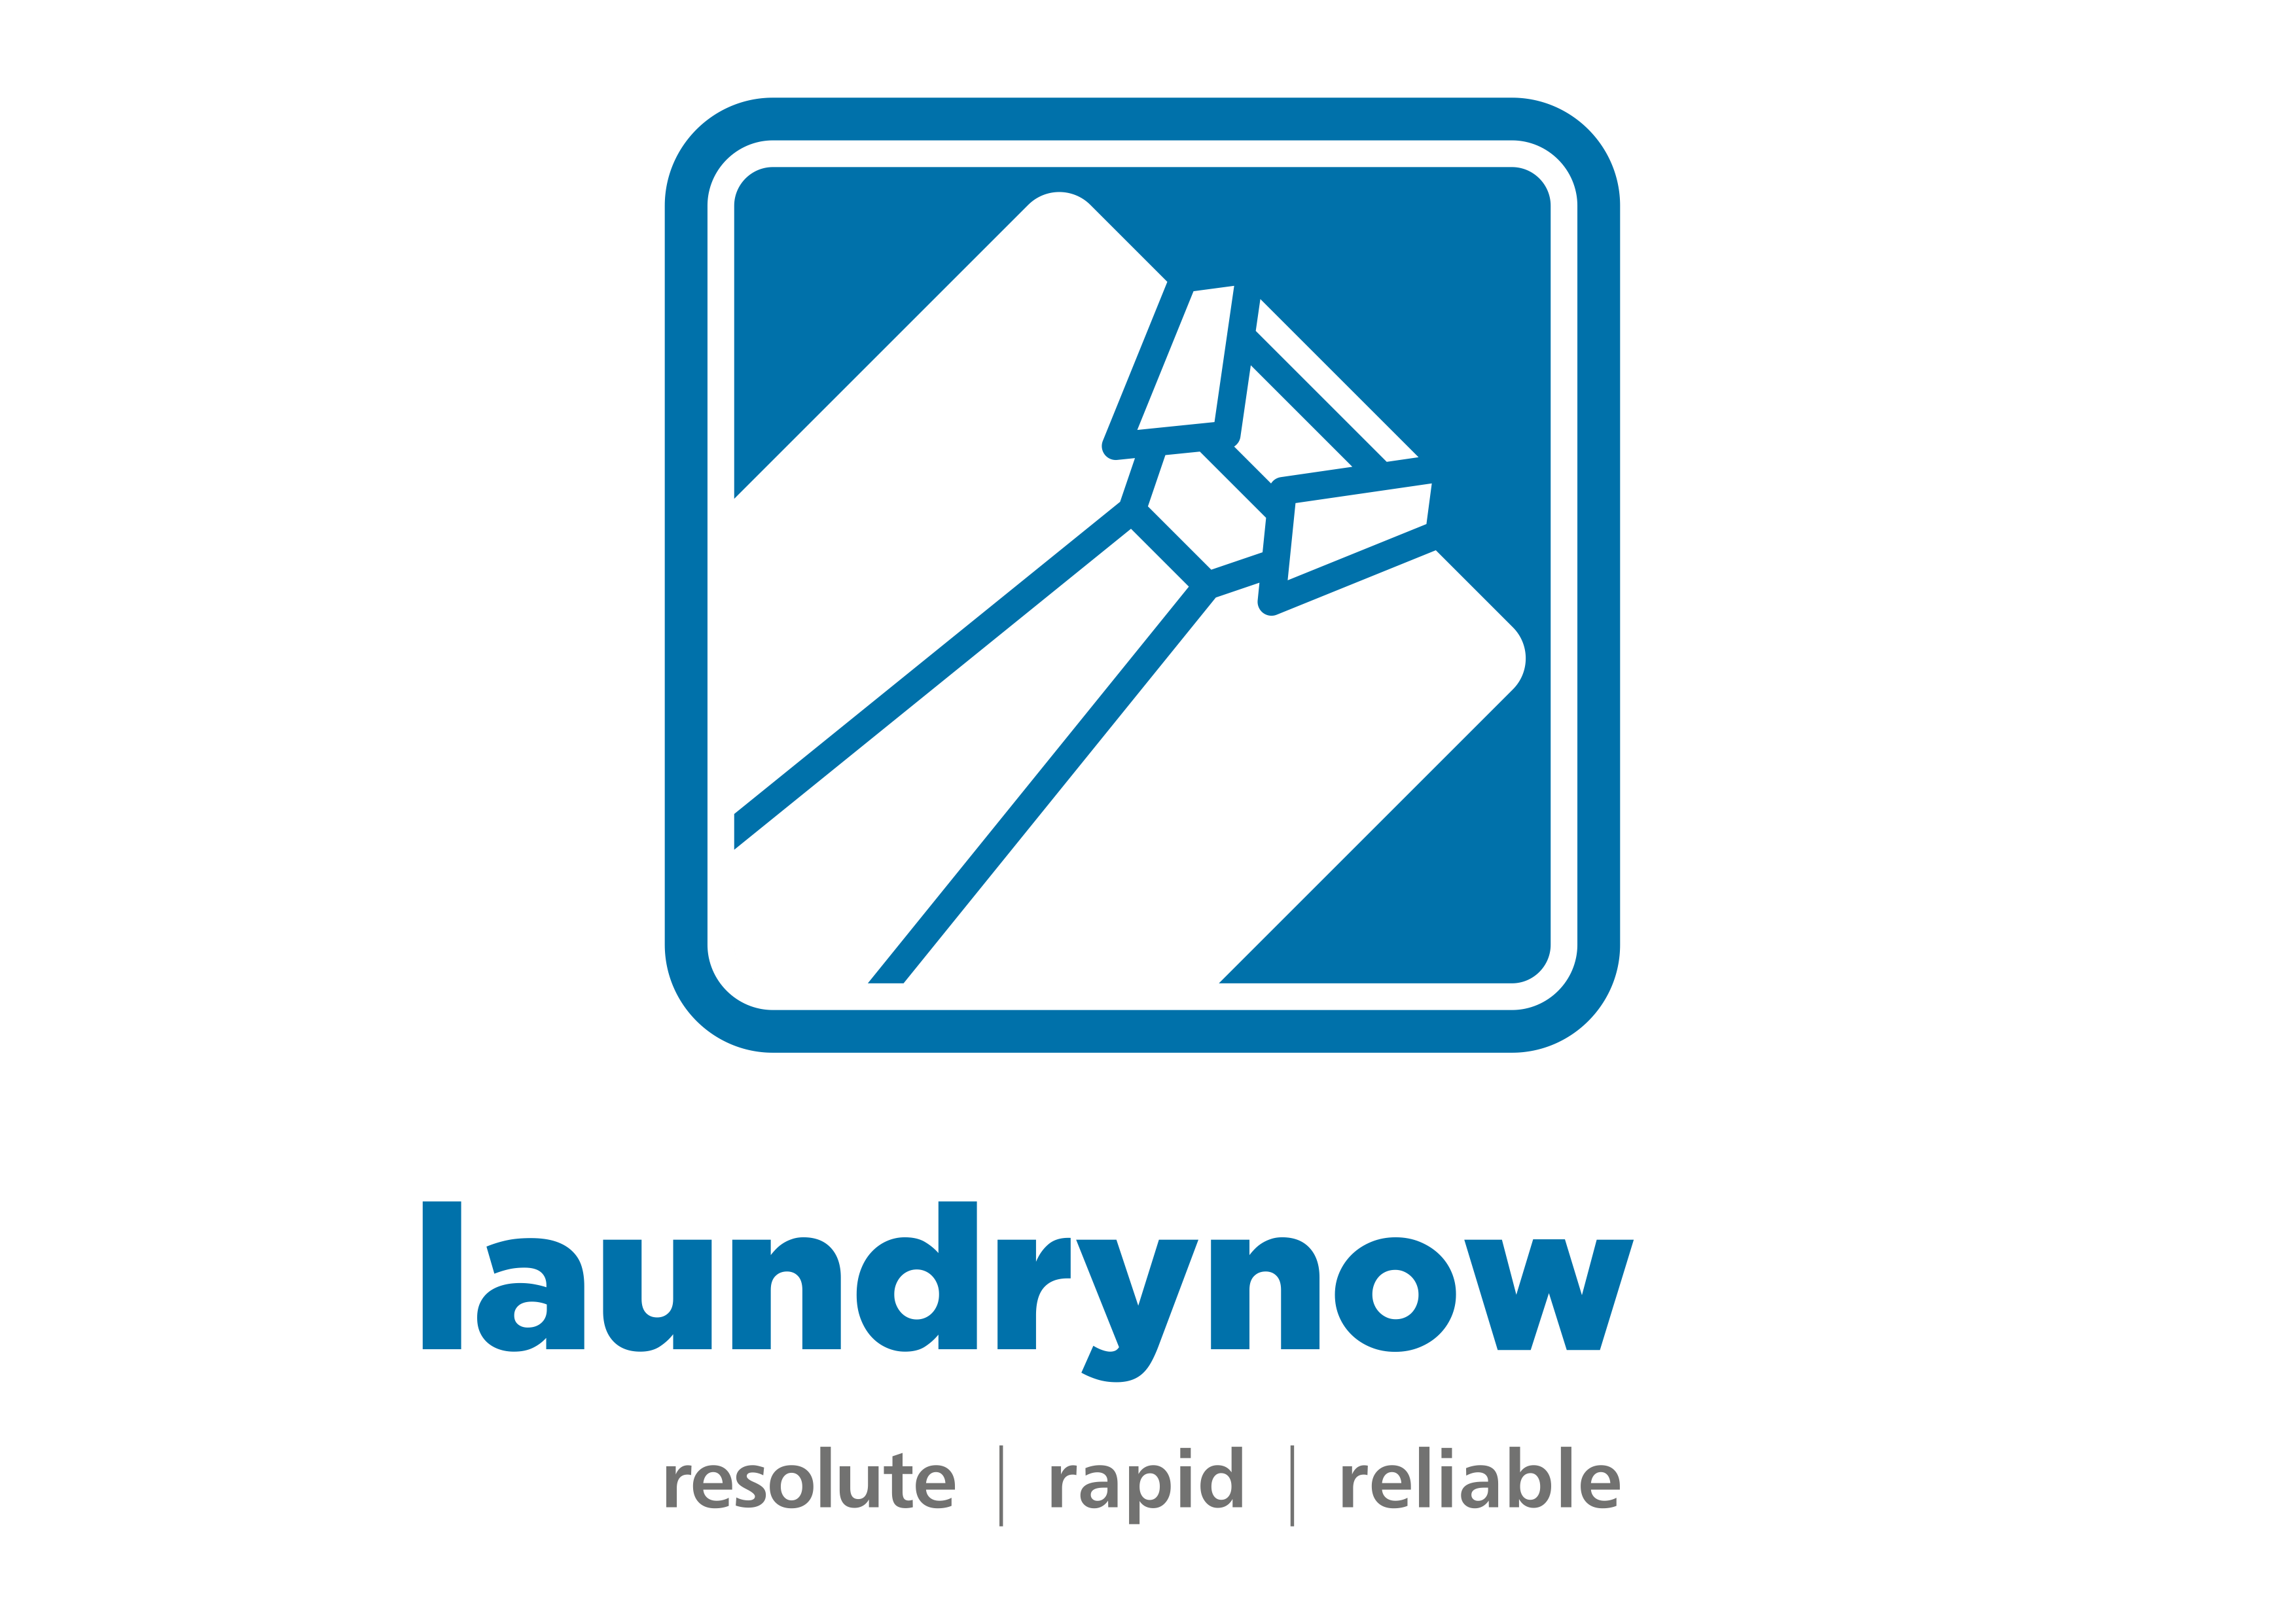 Laundrynow logo